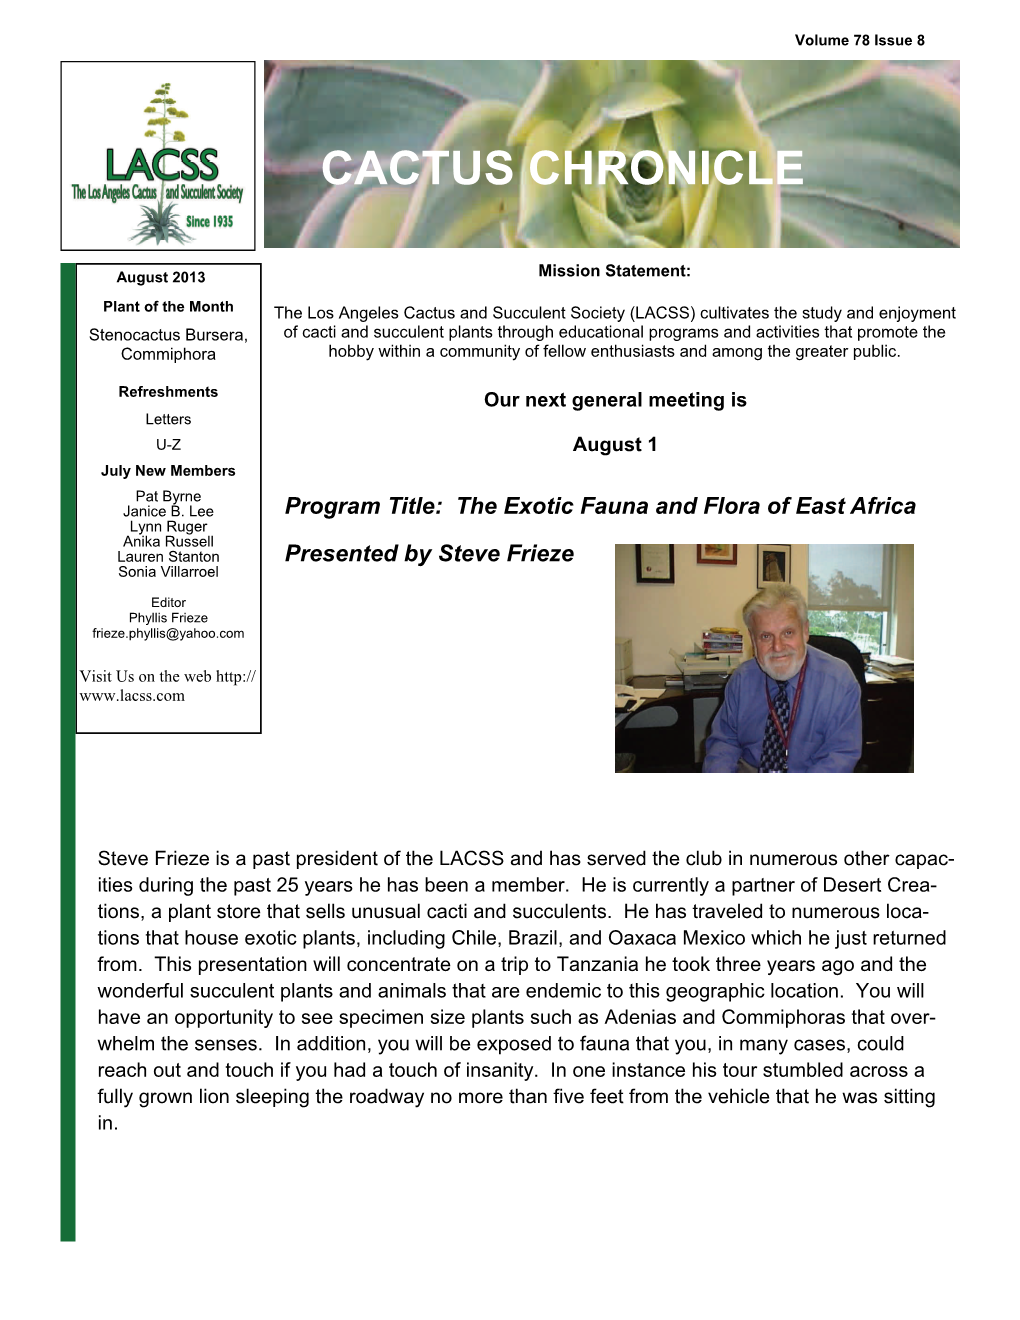 Cactus Chronicle